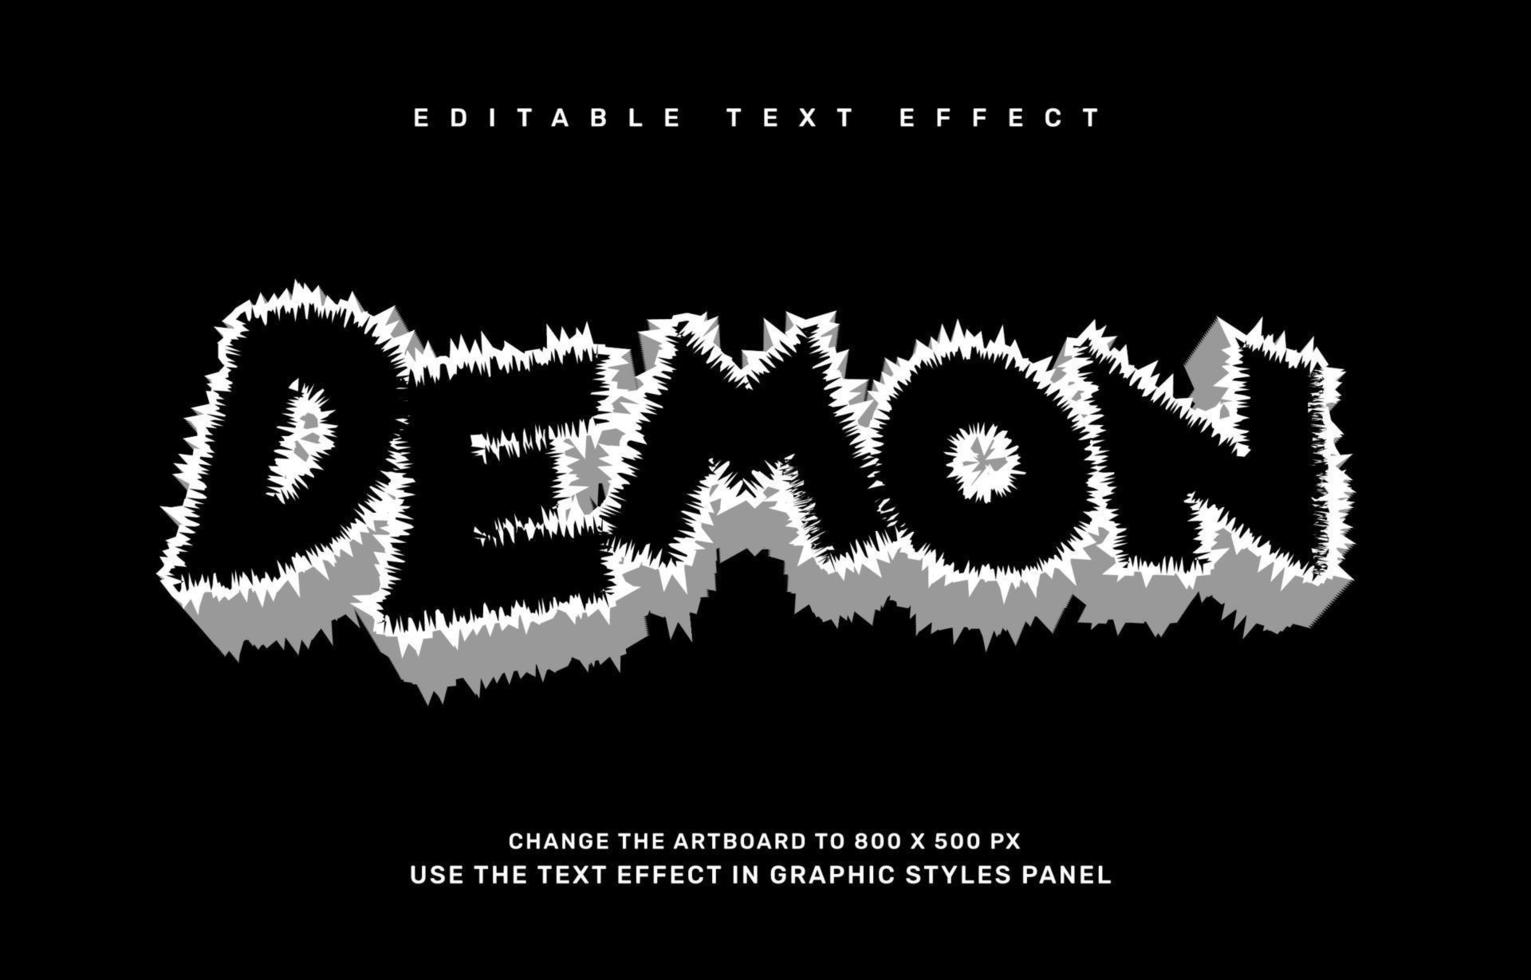 Demon editable text effect template vector